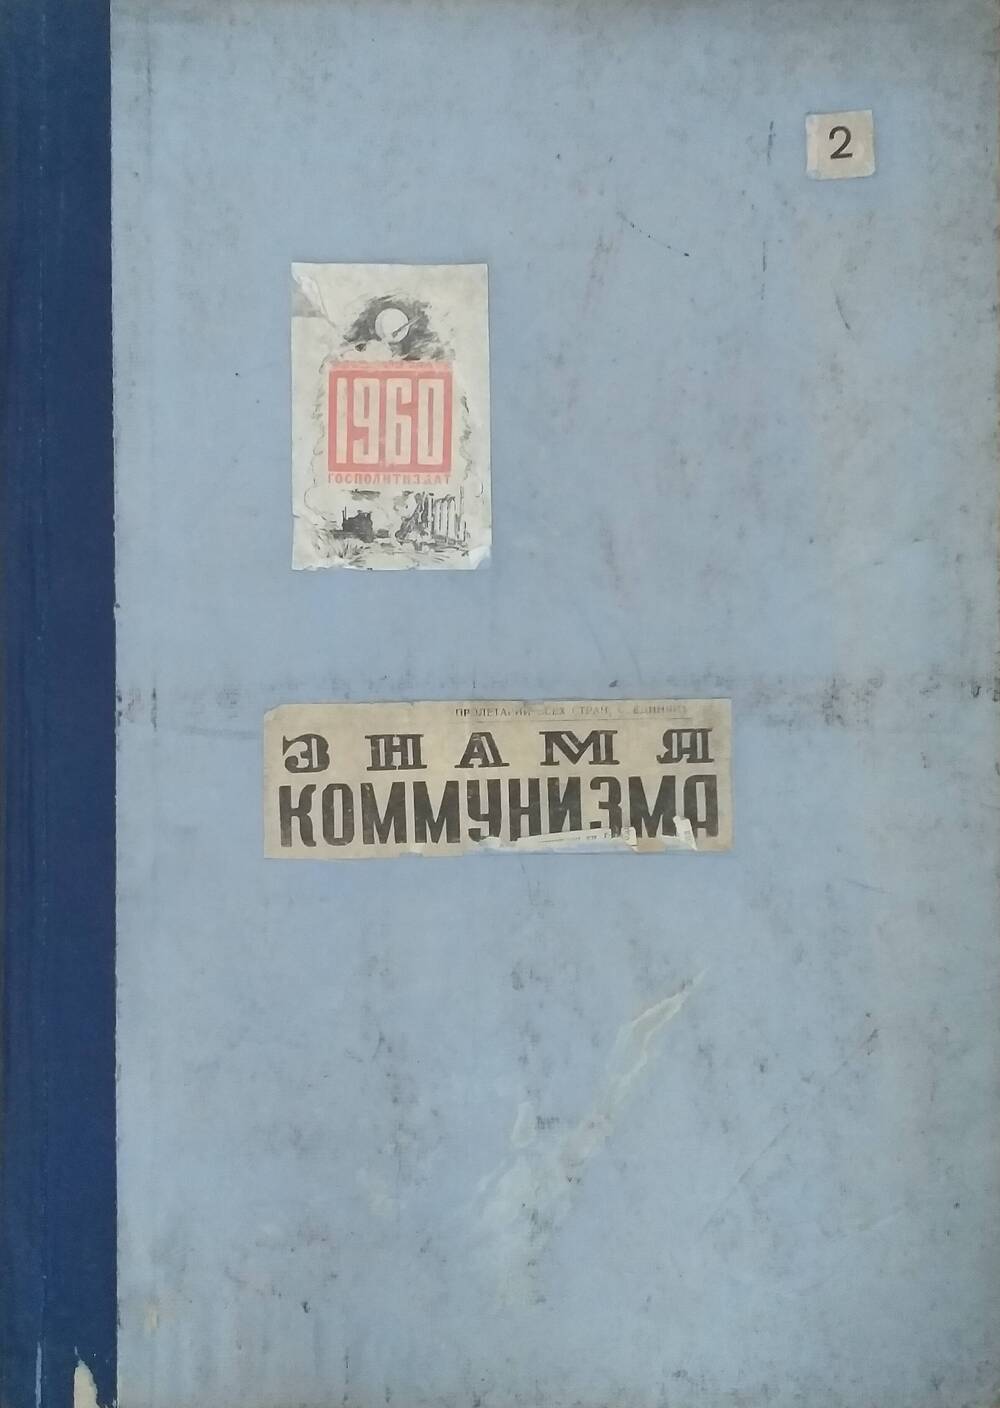 Подшивка газет Знамя коммунизма с № 130 по № 259 за 1960 год.